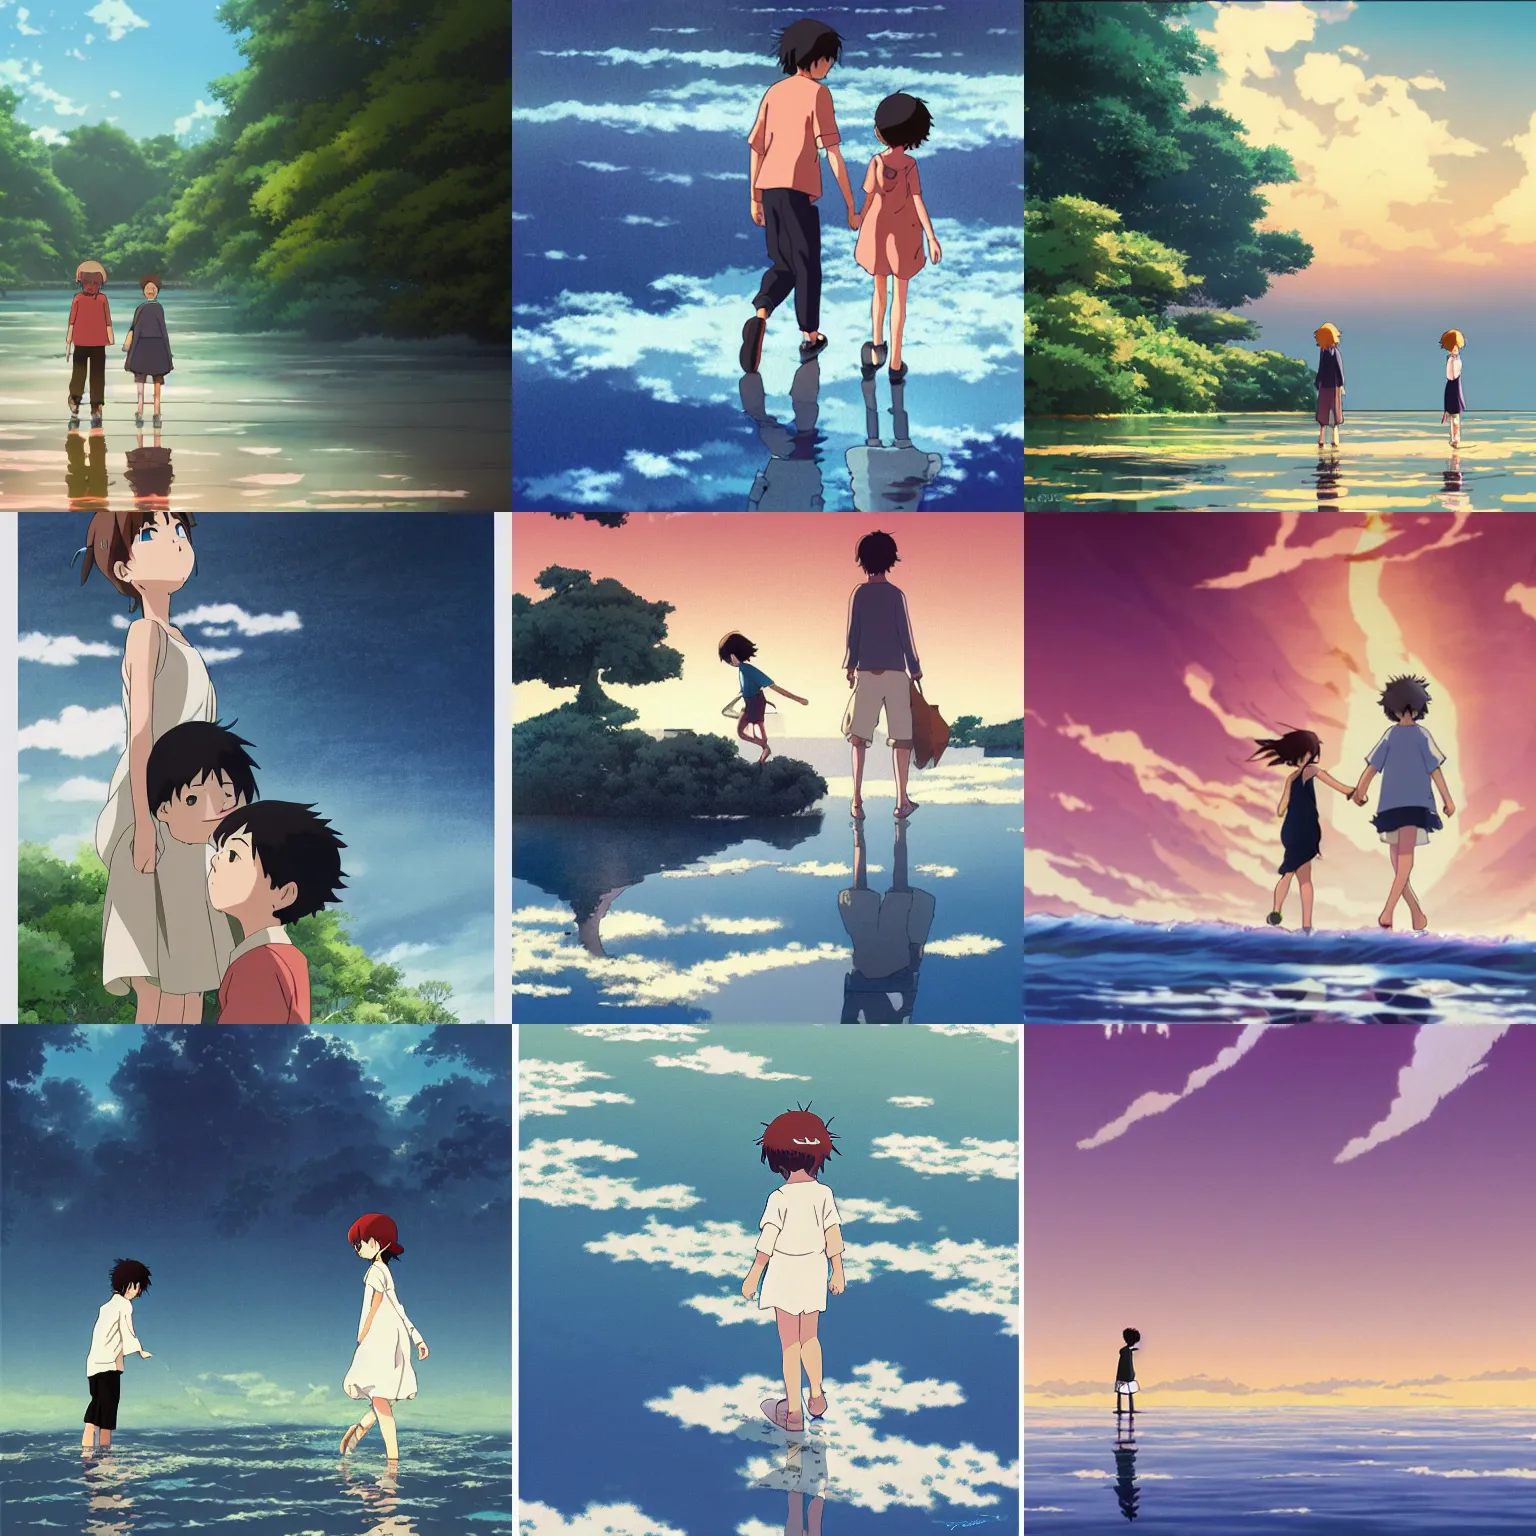 Anime Girl Walking On The Water Live Wallpaper - MoeWalls